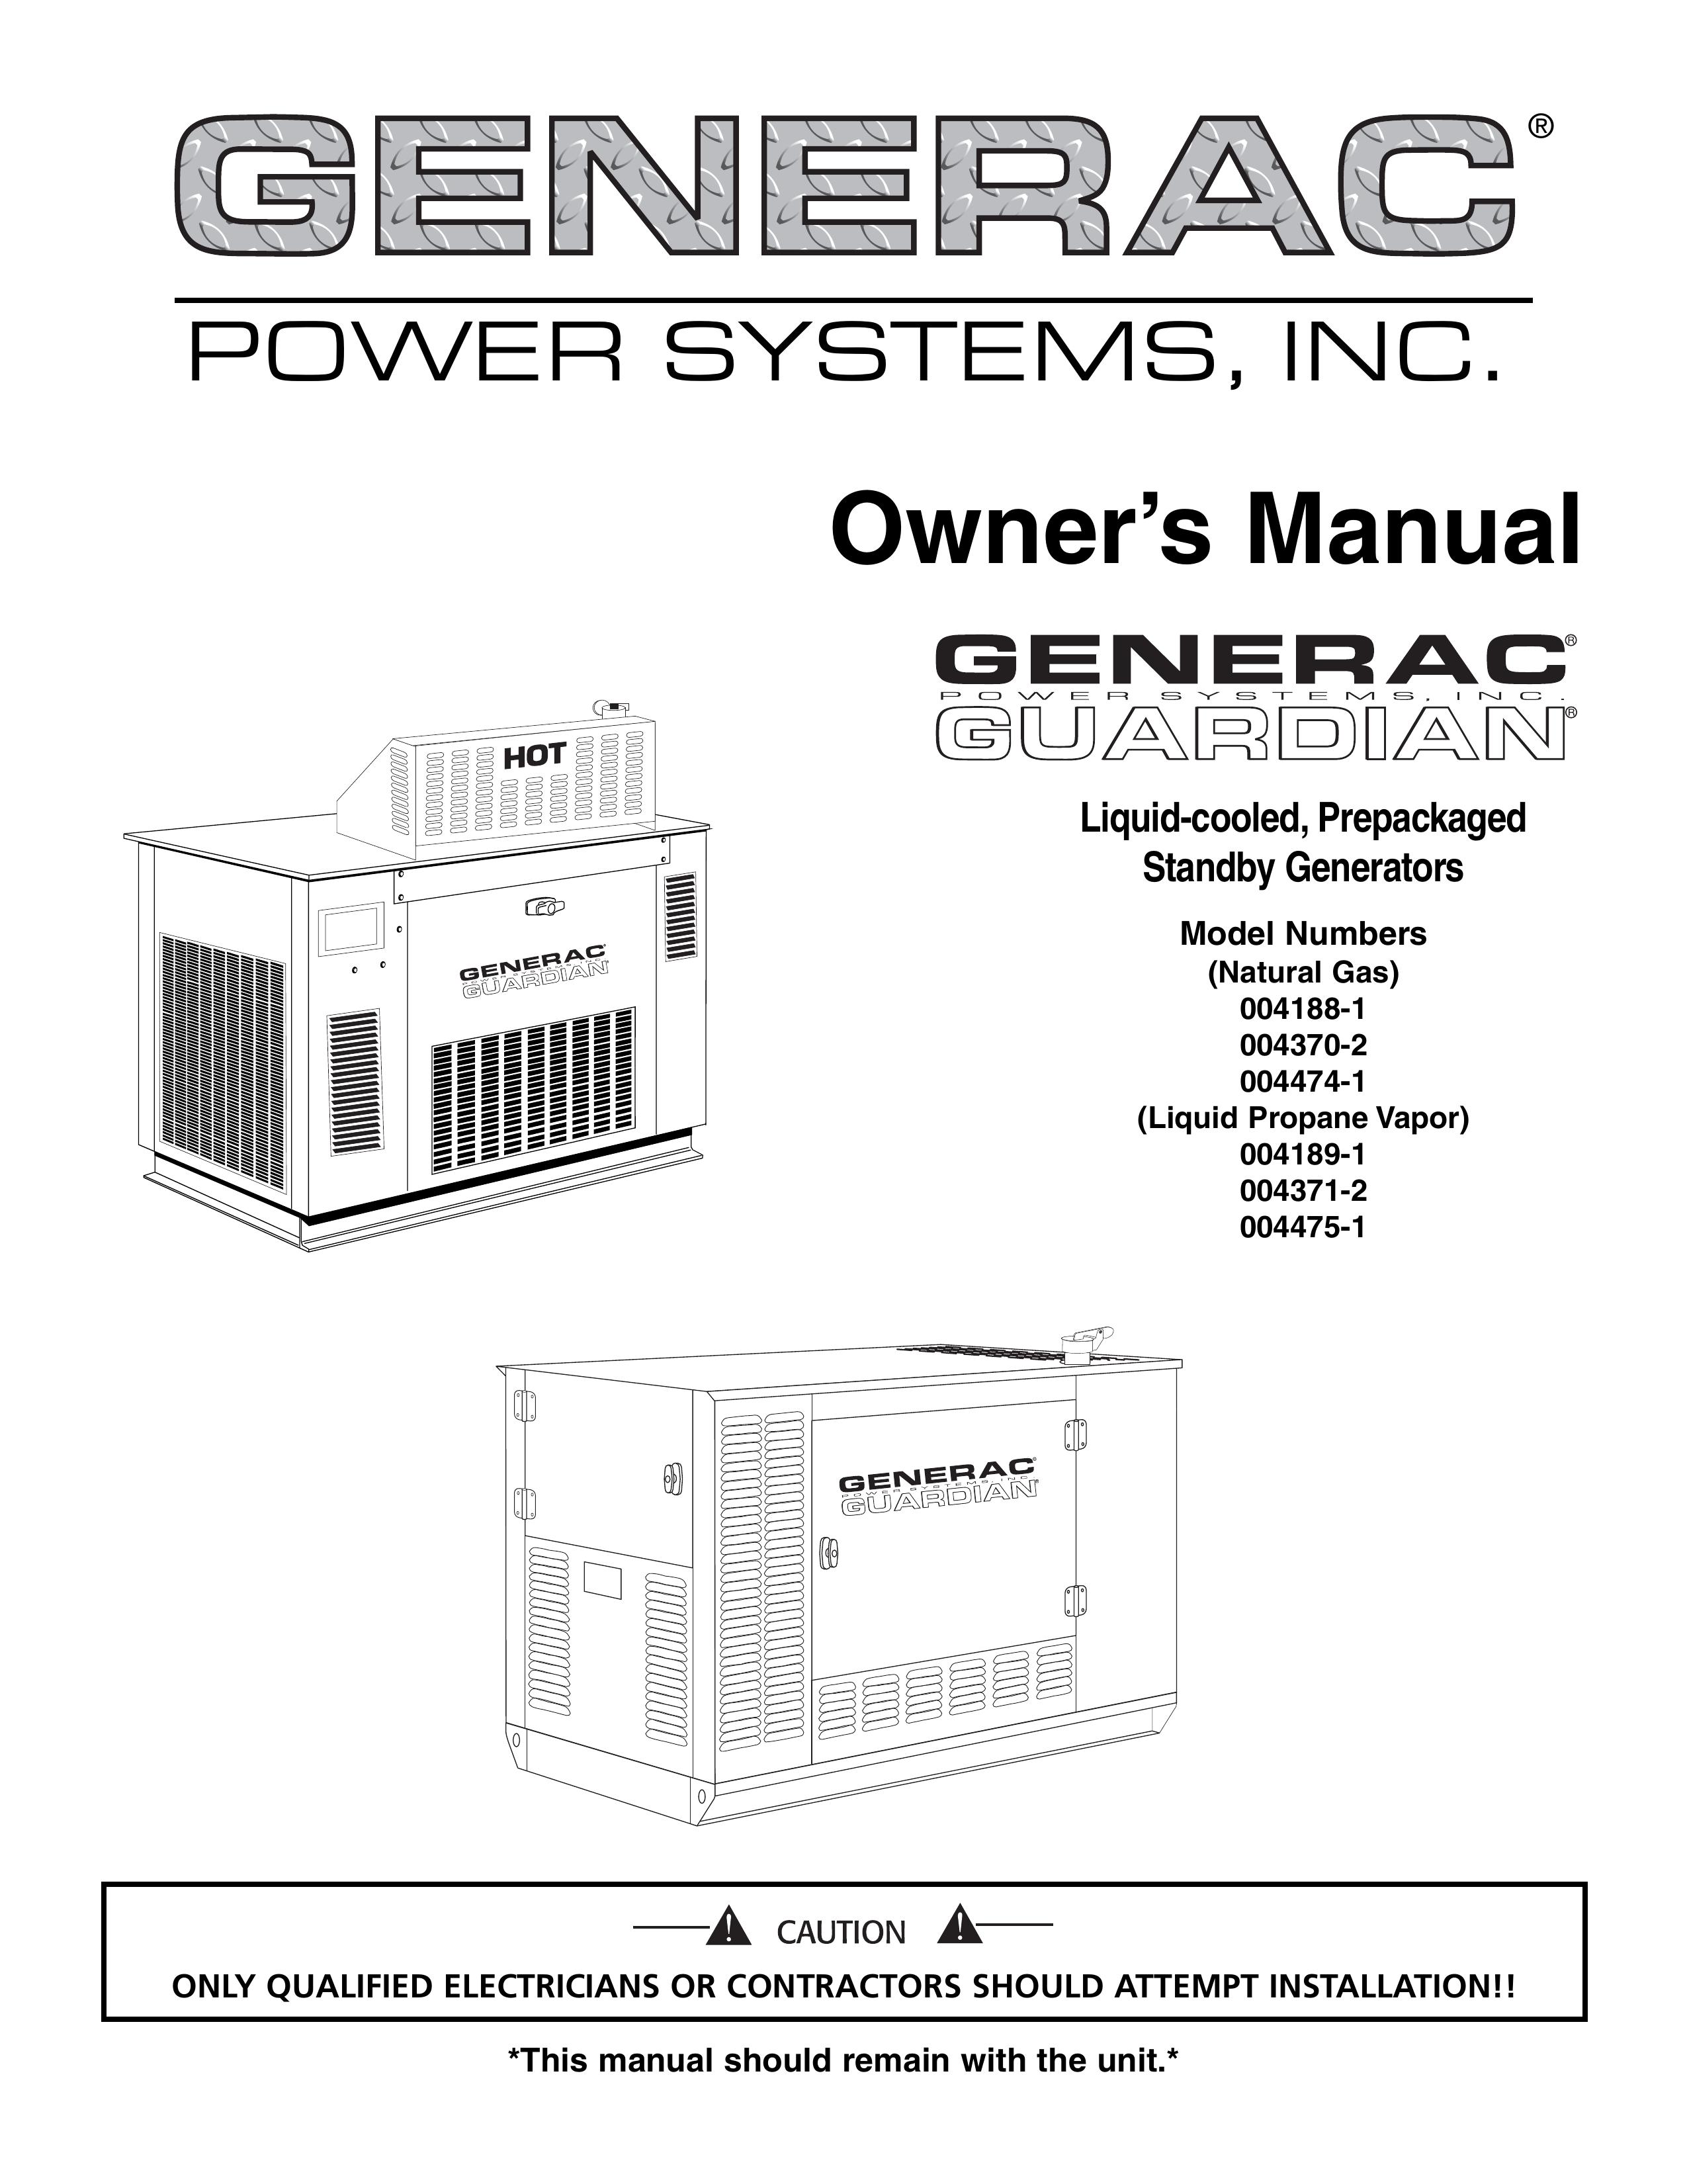 Generac Power Systems 004475-1 Portable Generator User Manual